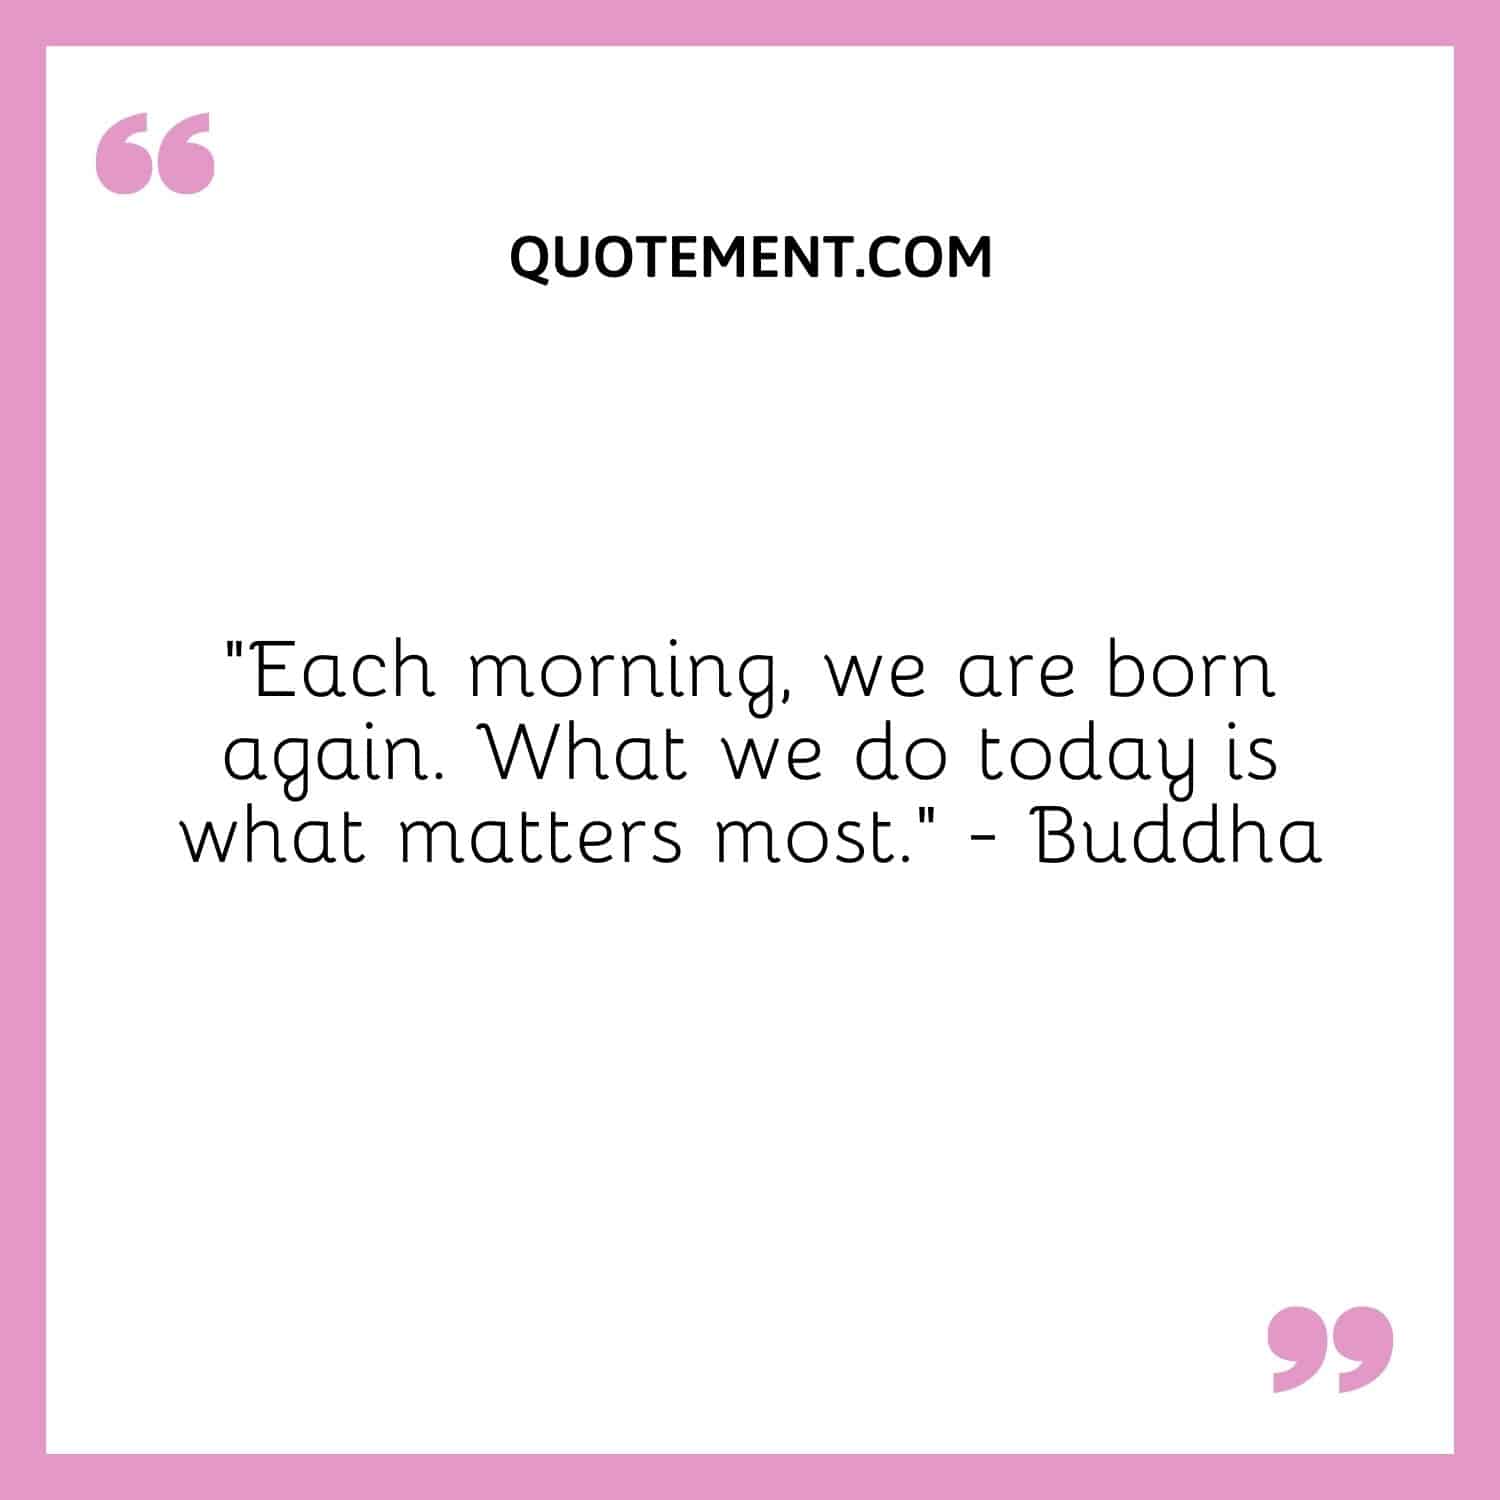 Each morning, we are born again